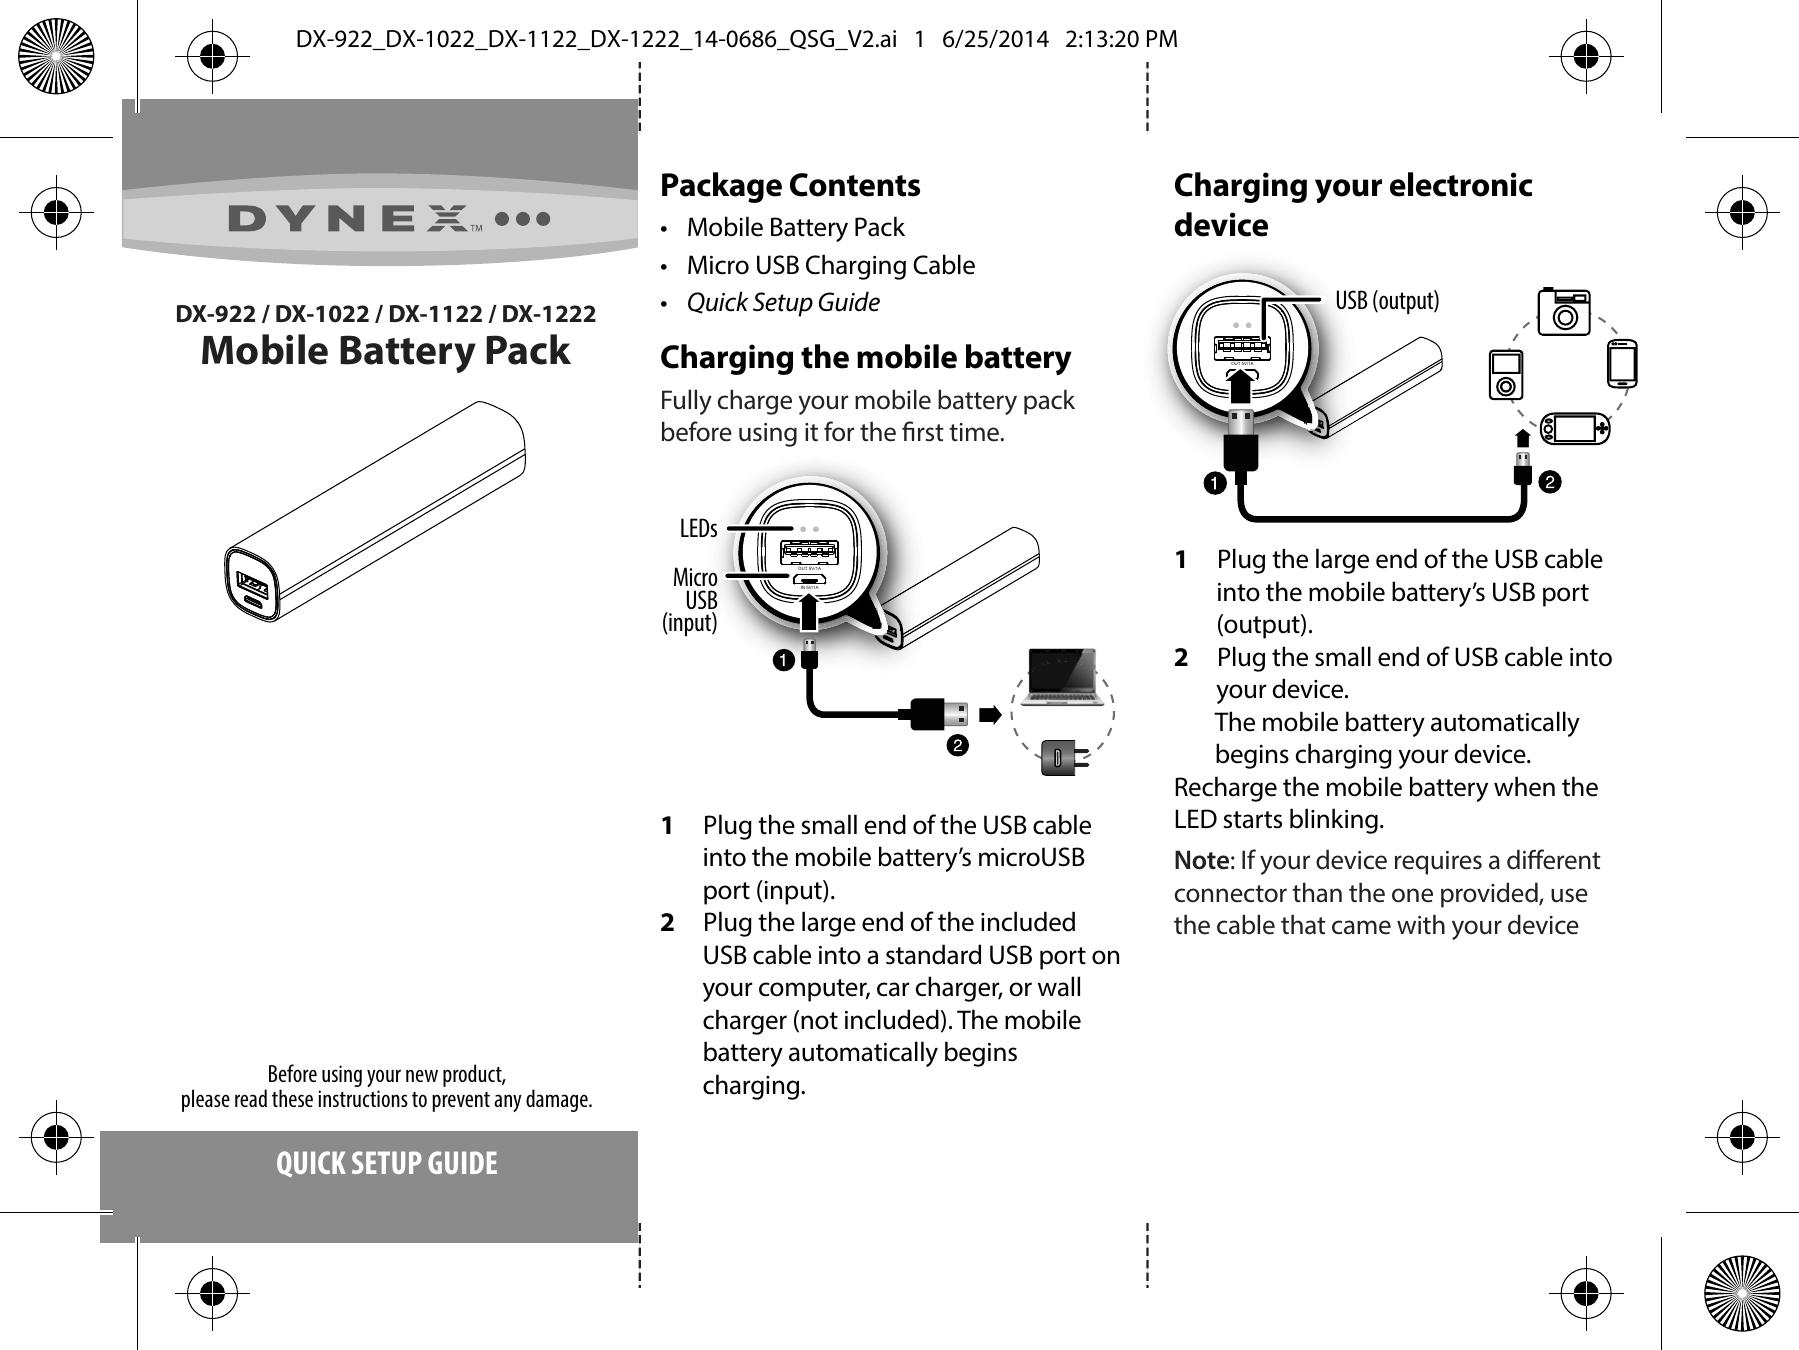 Dynex DX-1222 Marine Battery User Manual